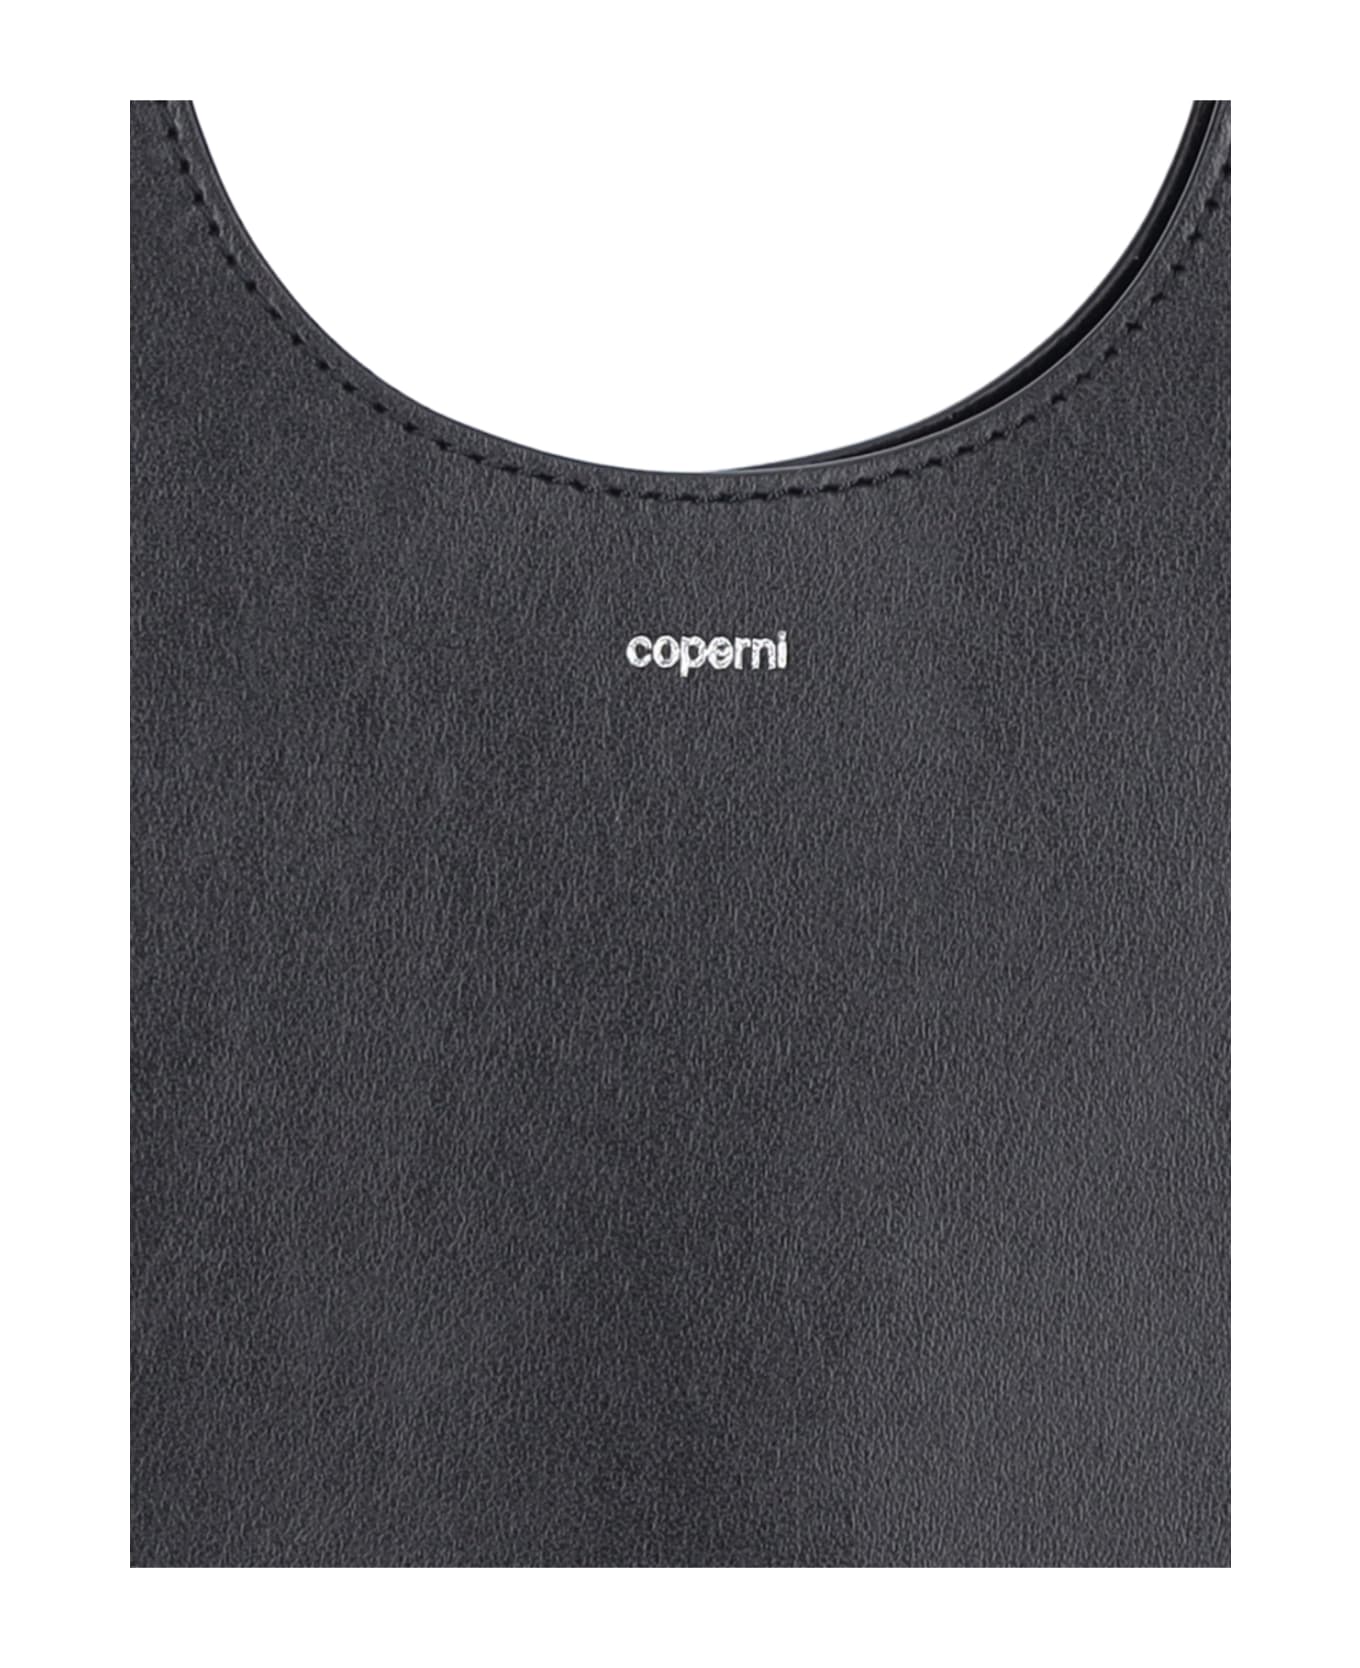 Coperni Micro Bag 'swipe' - BLACK